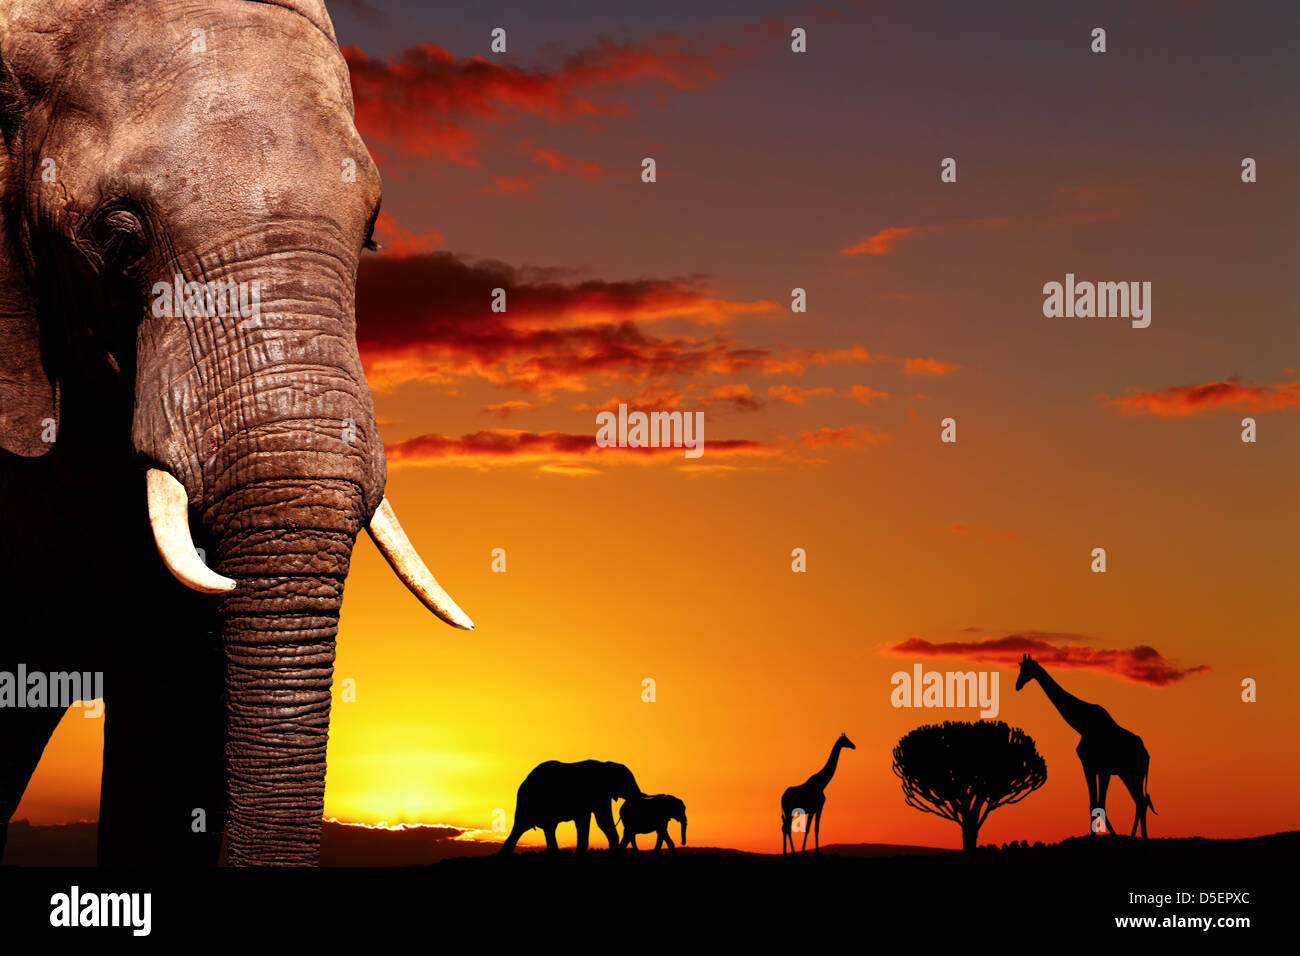 African elephant in savanna at sunset Stock Photo